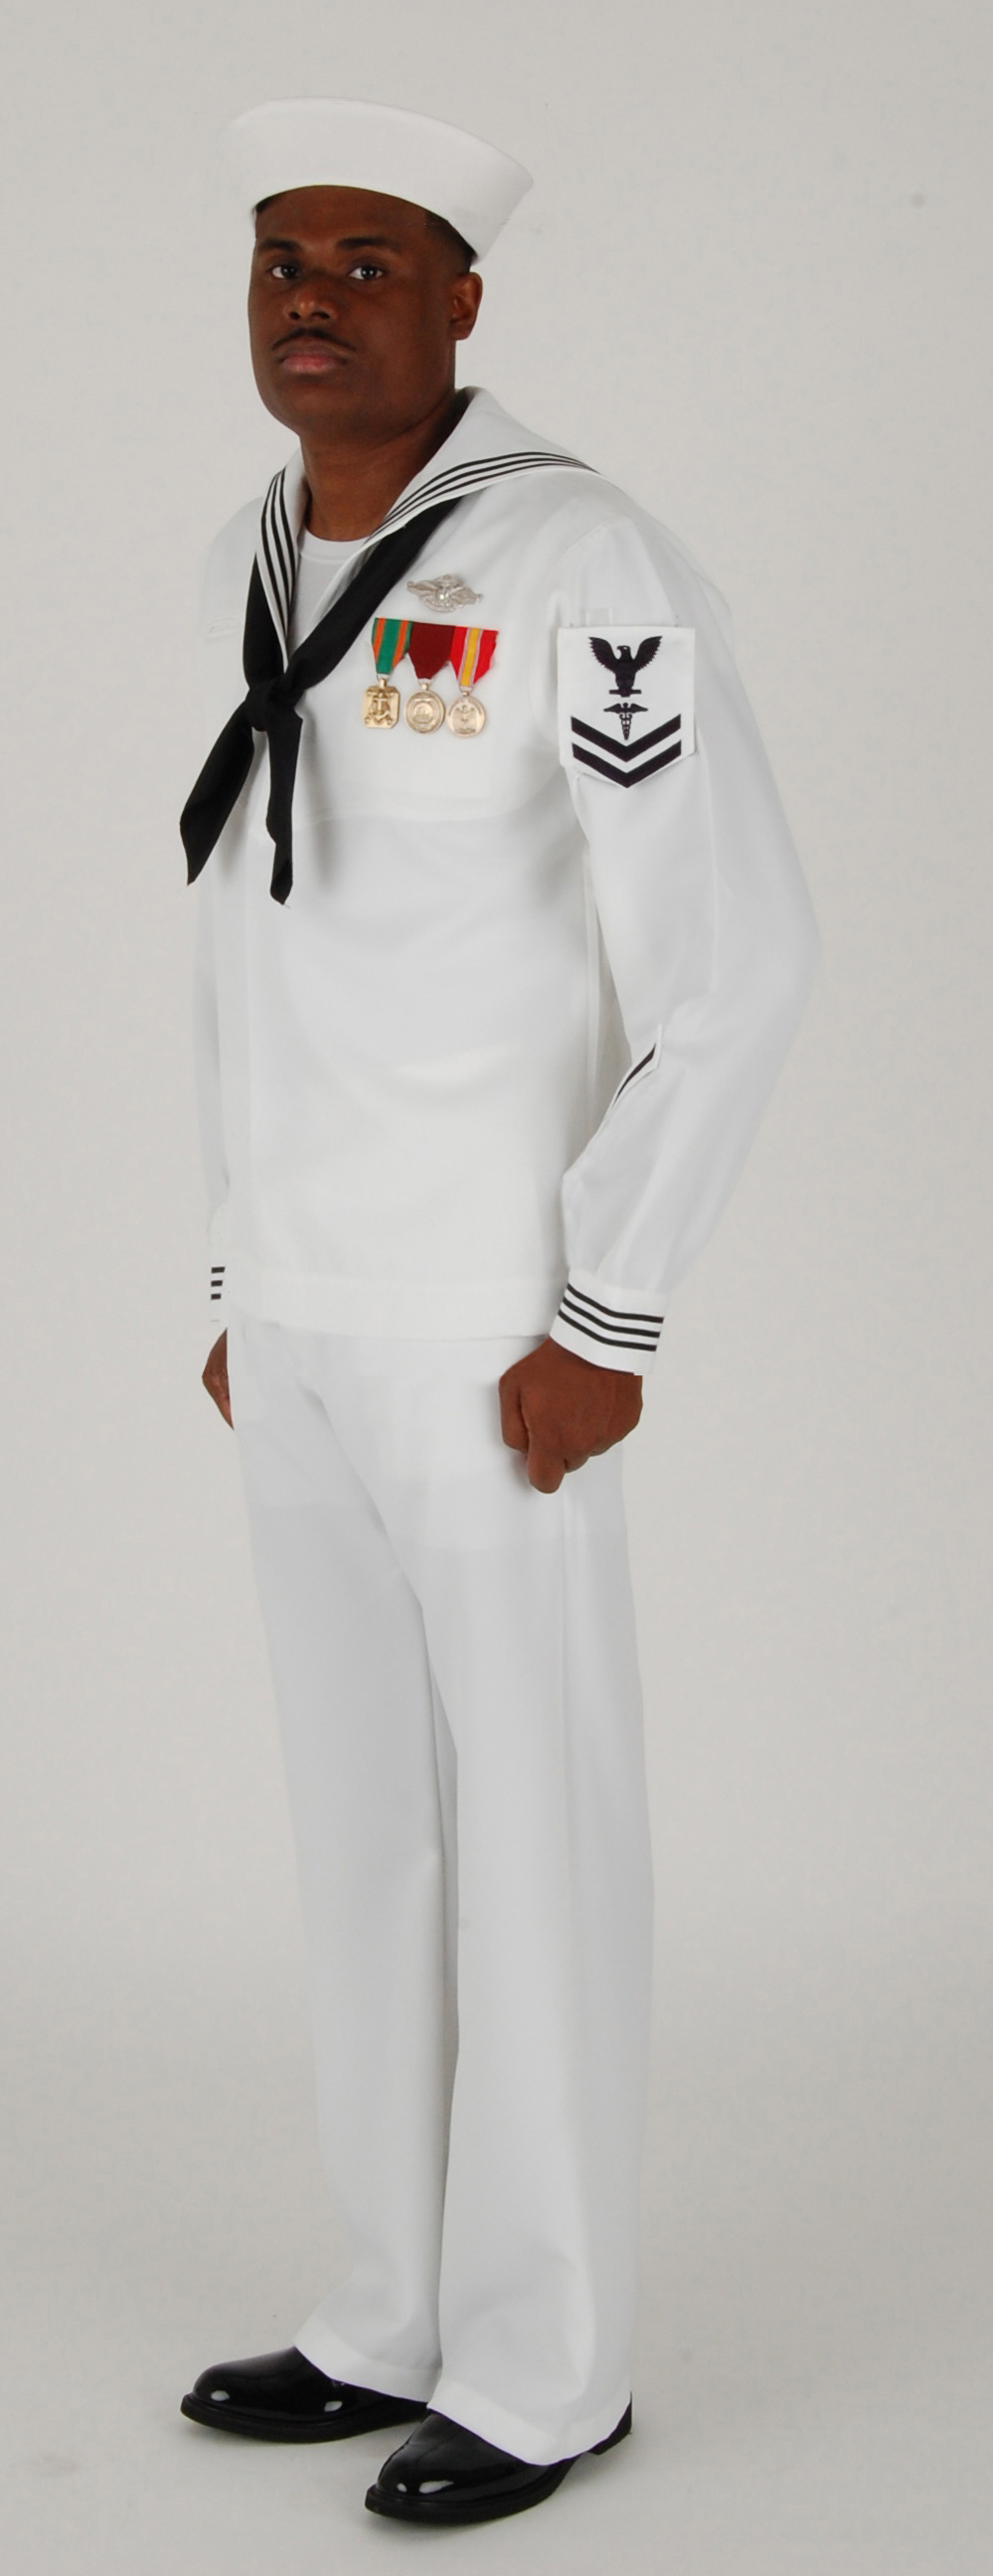 Navy Dress White Uniform Medal Placement